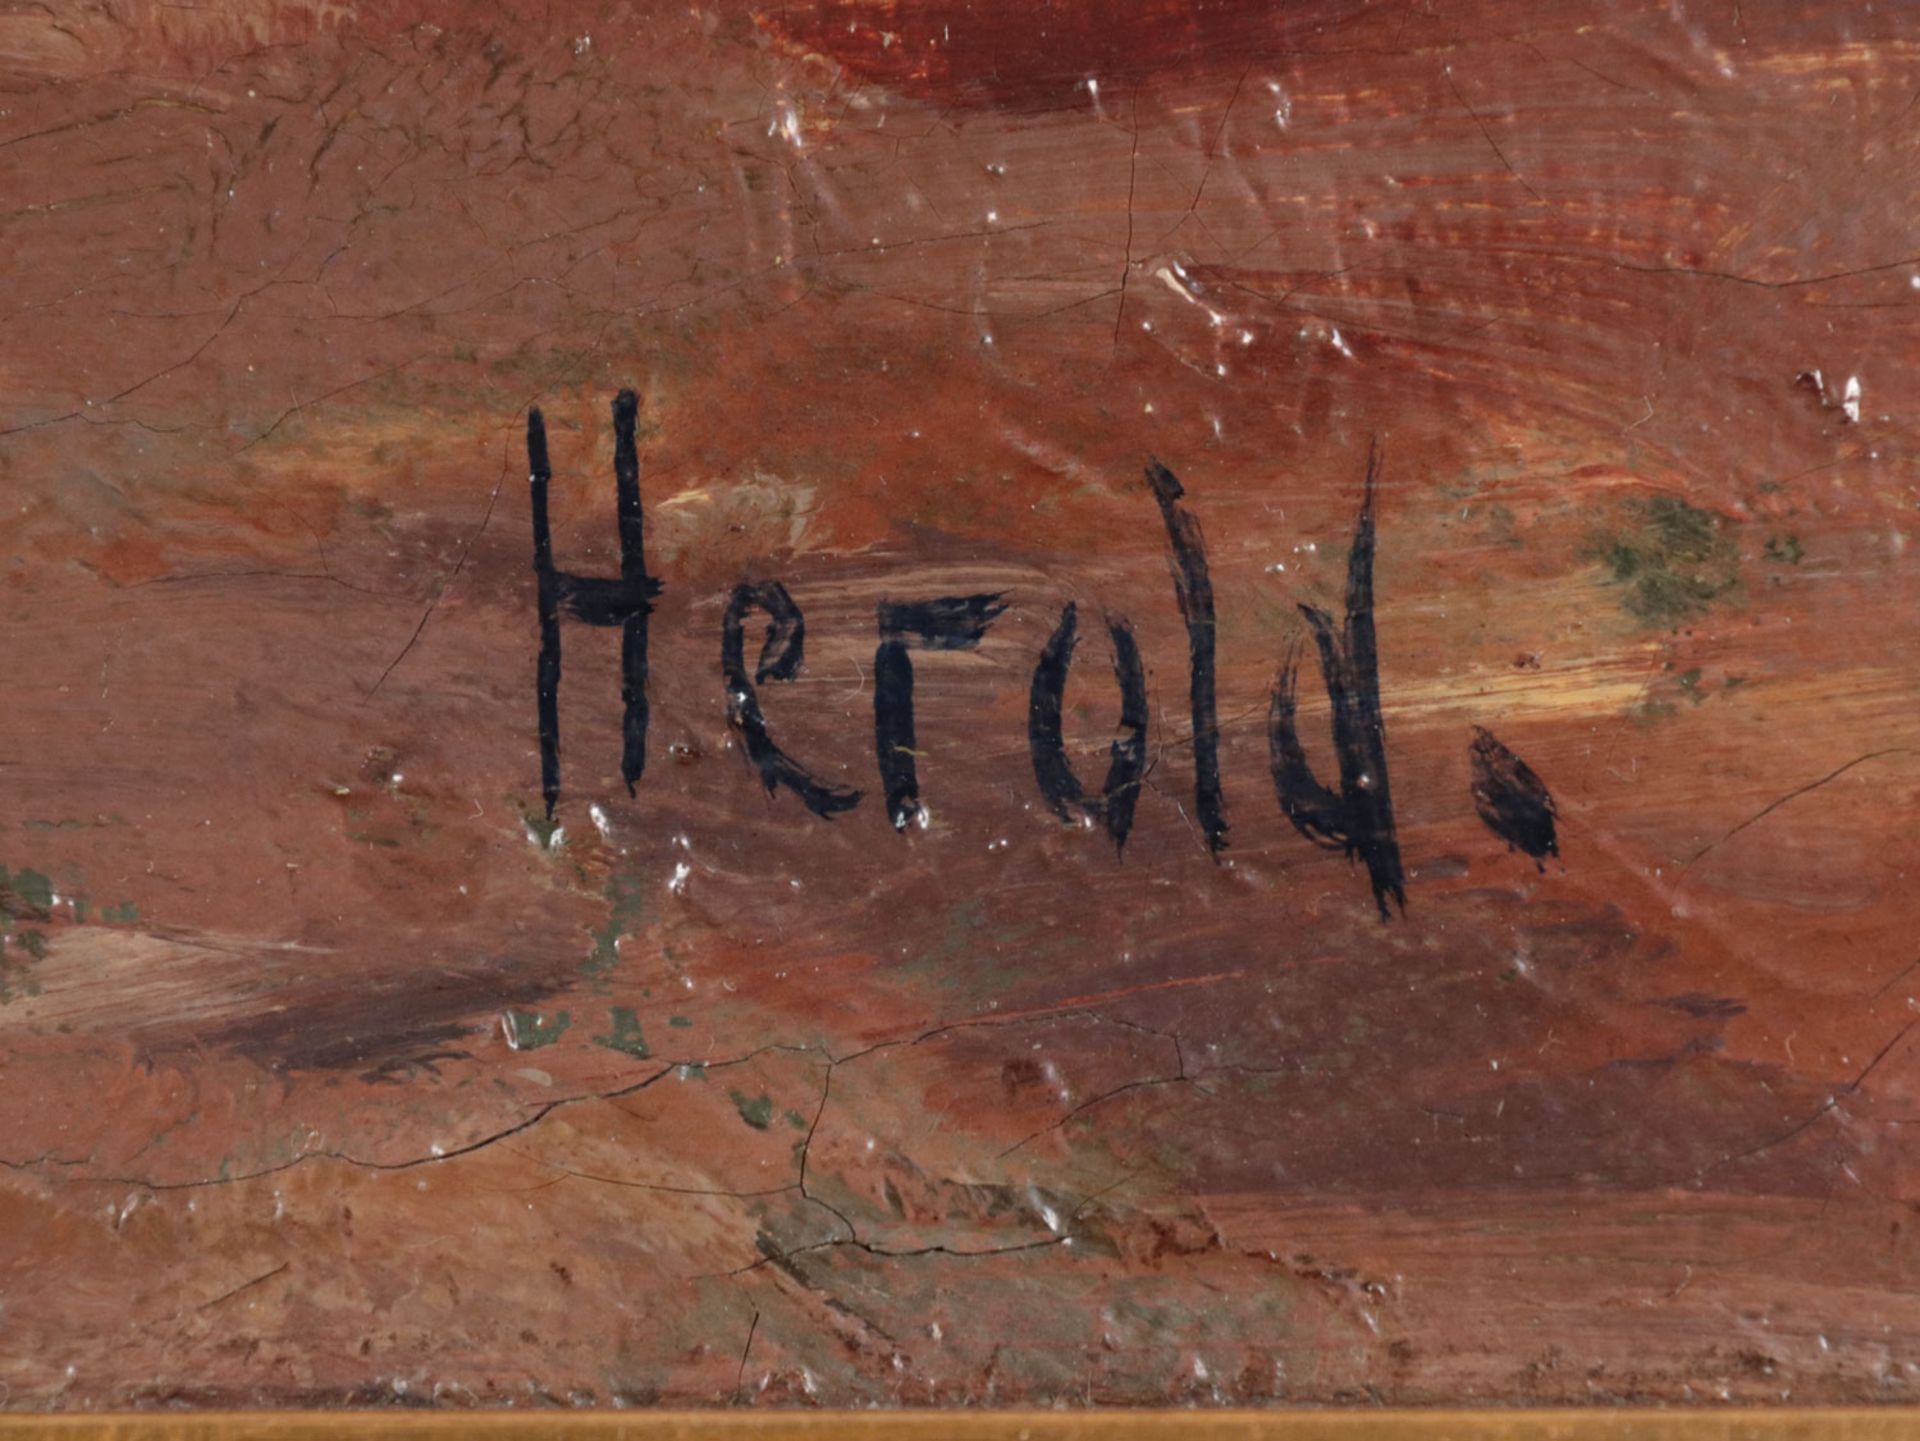 Herold - Image 4 of 6